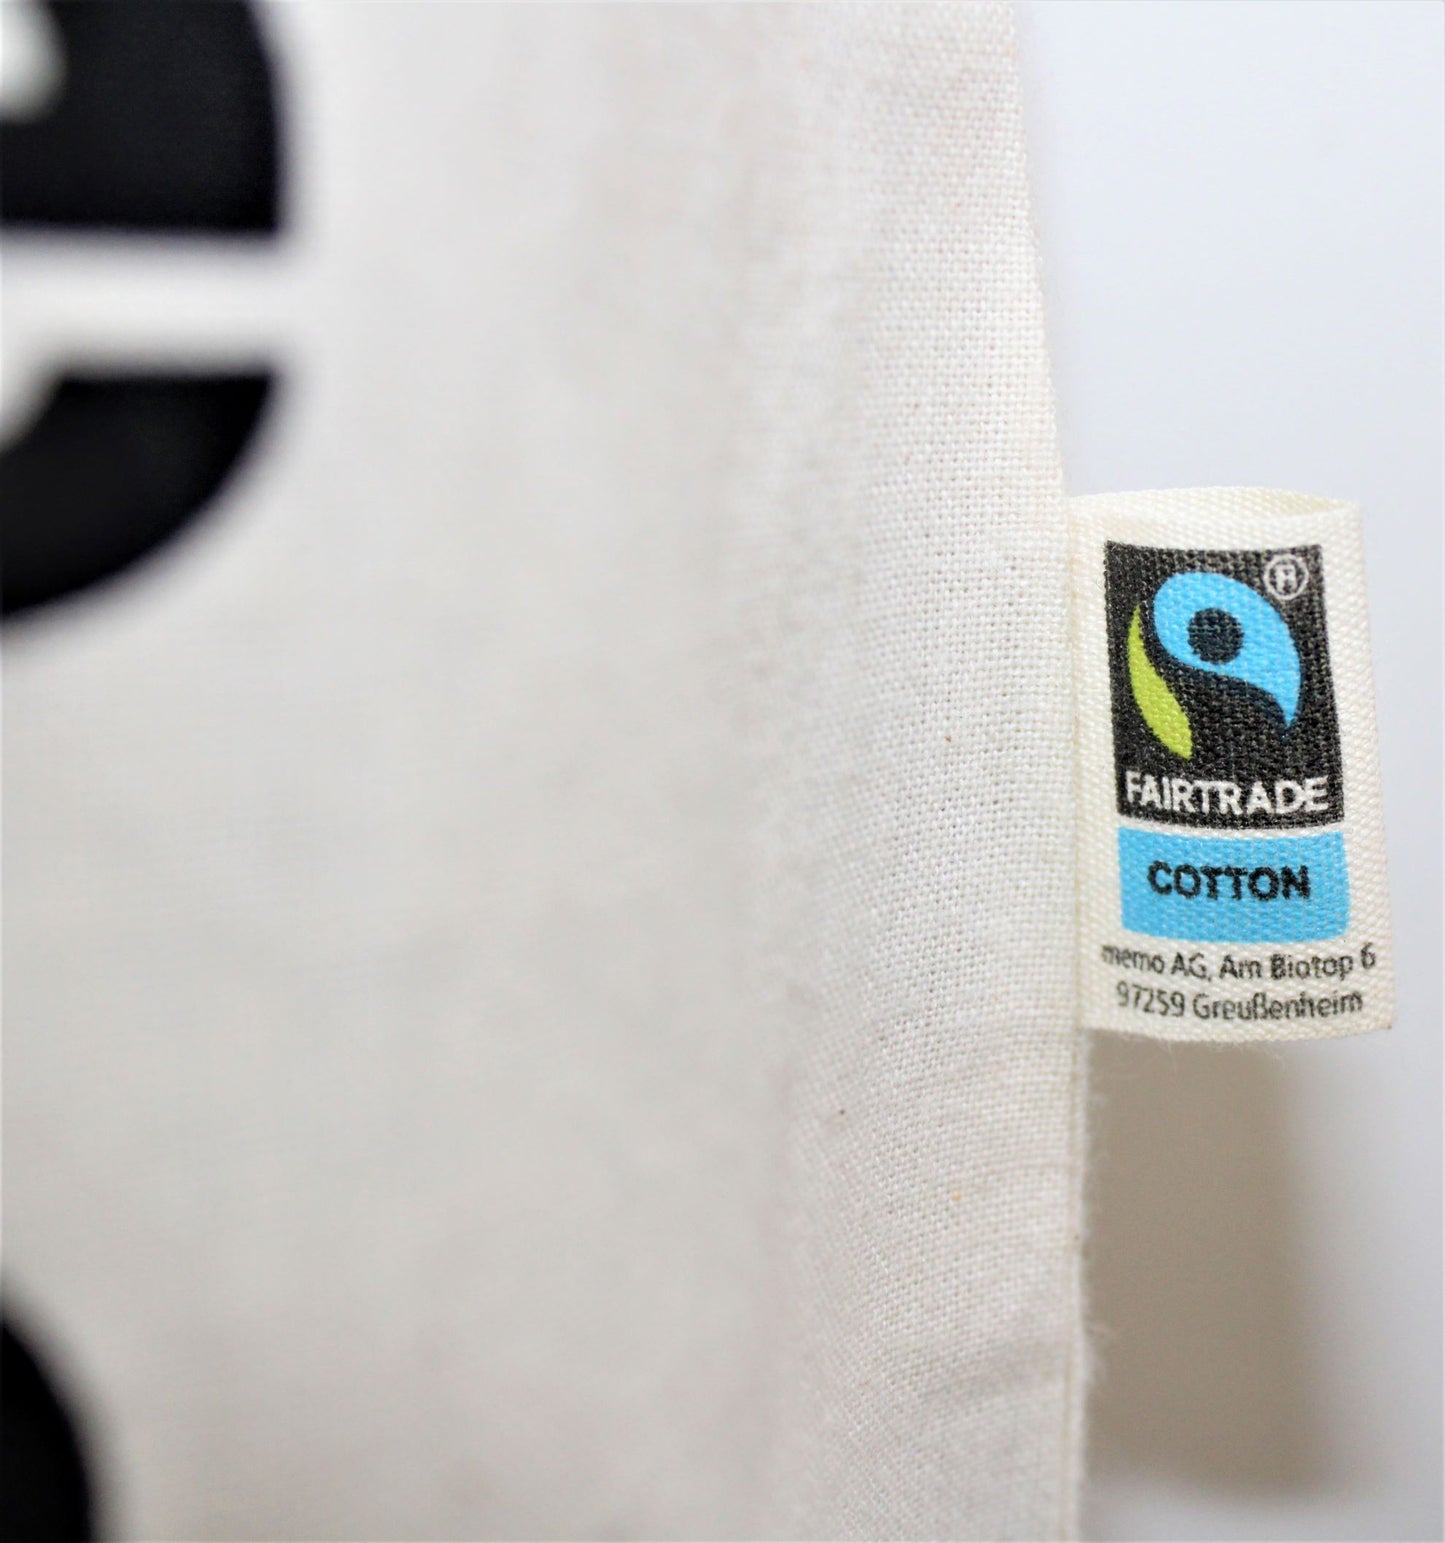 Fairtrade Cotton Label on Nano Nagle Place Cotton Shopper